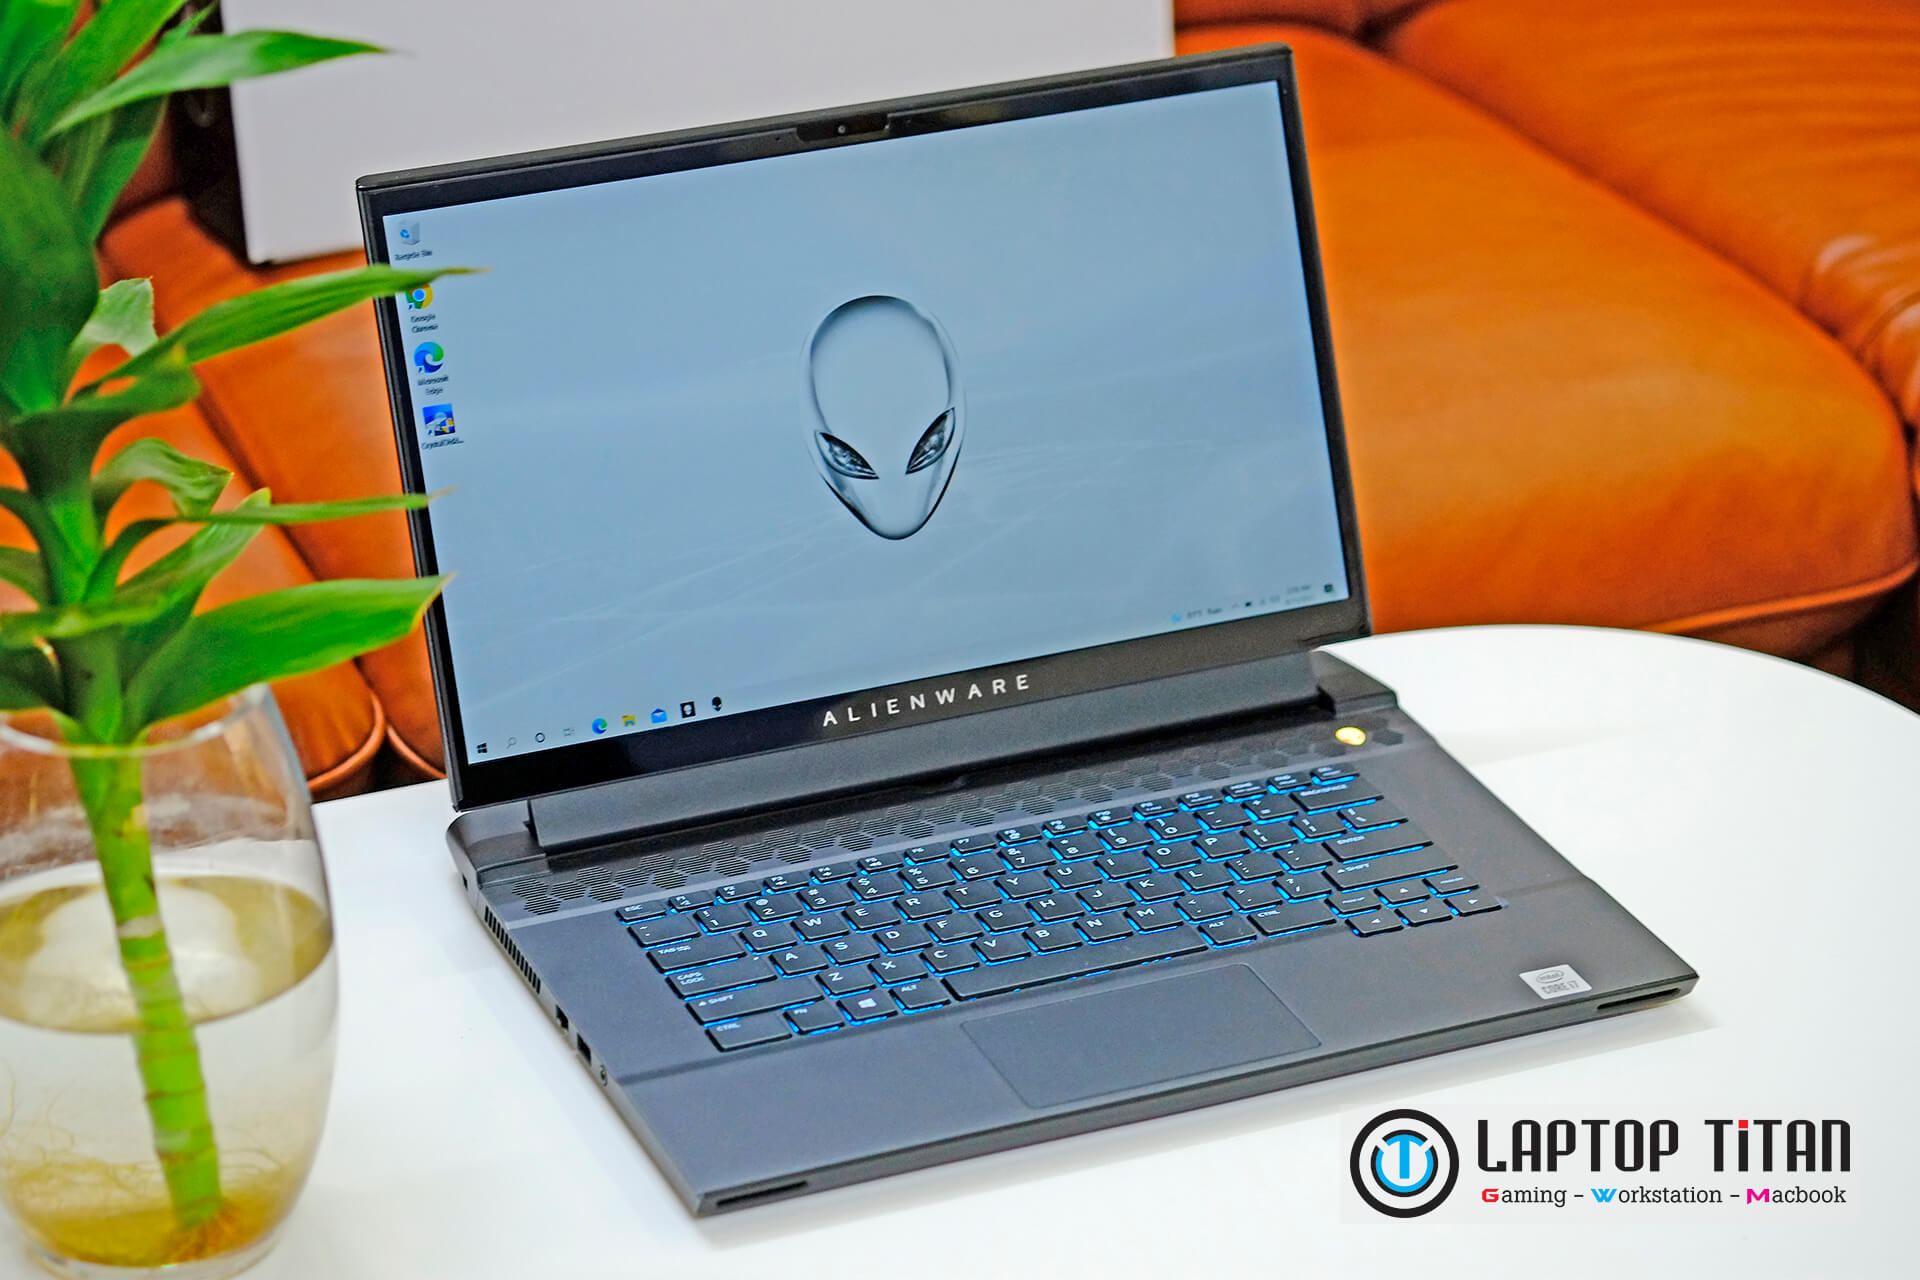 Dell-Alienware-M15-R3-laptoptitan-03.jpg